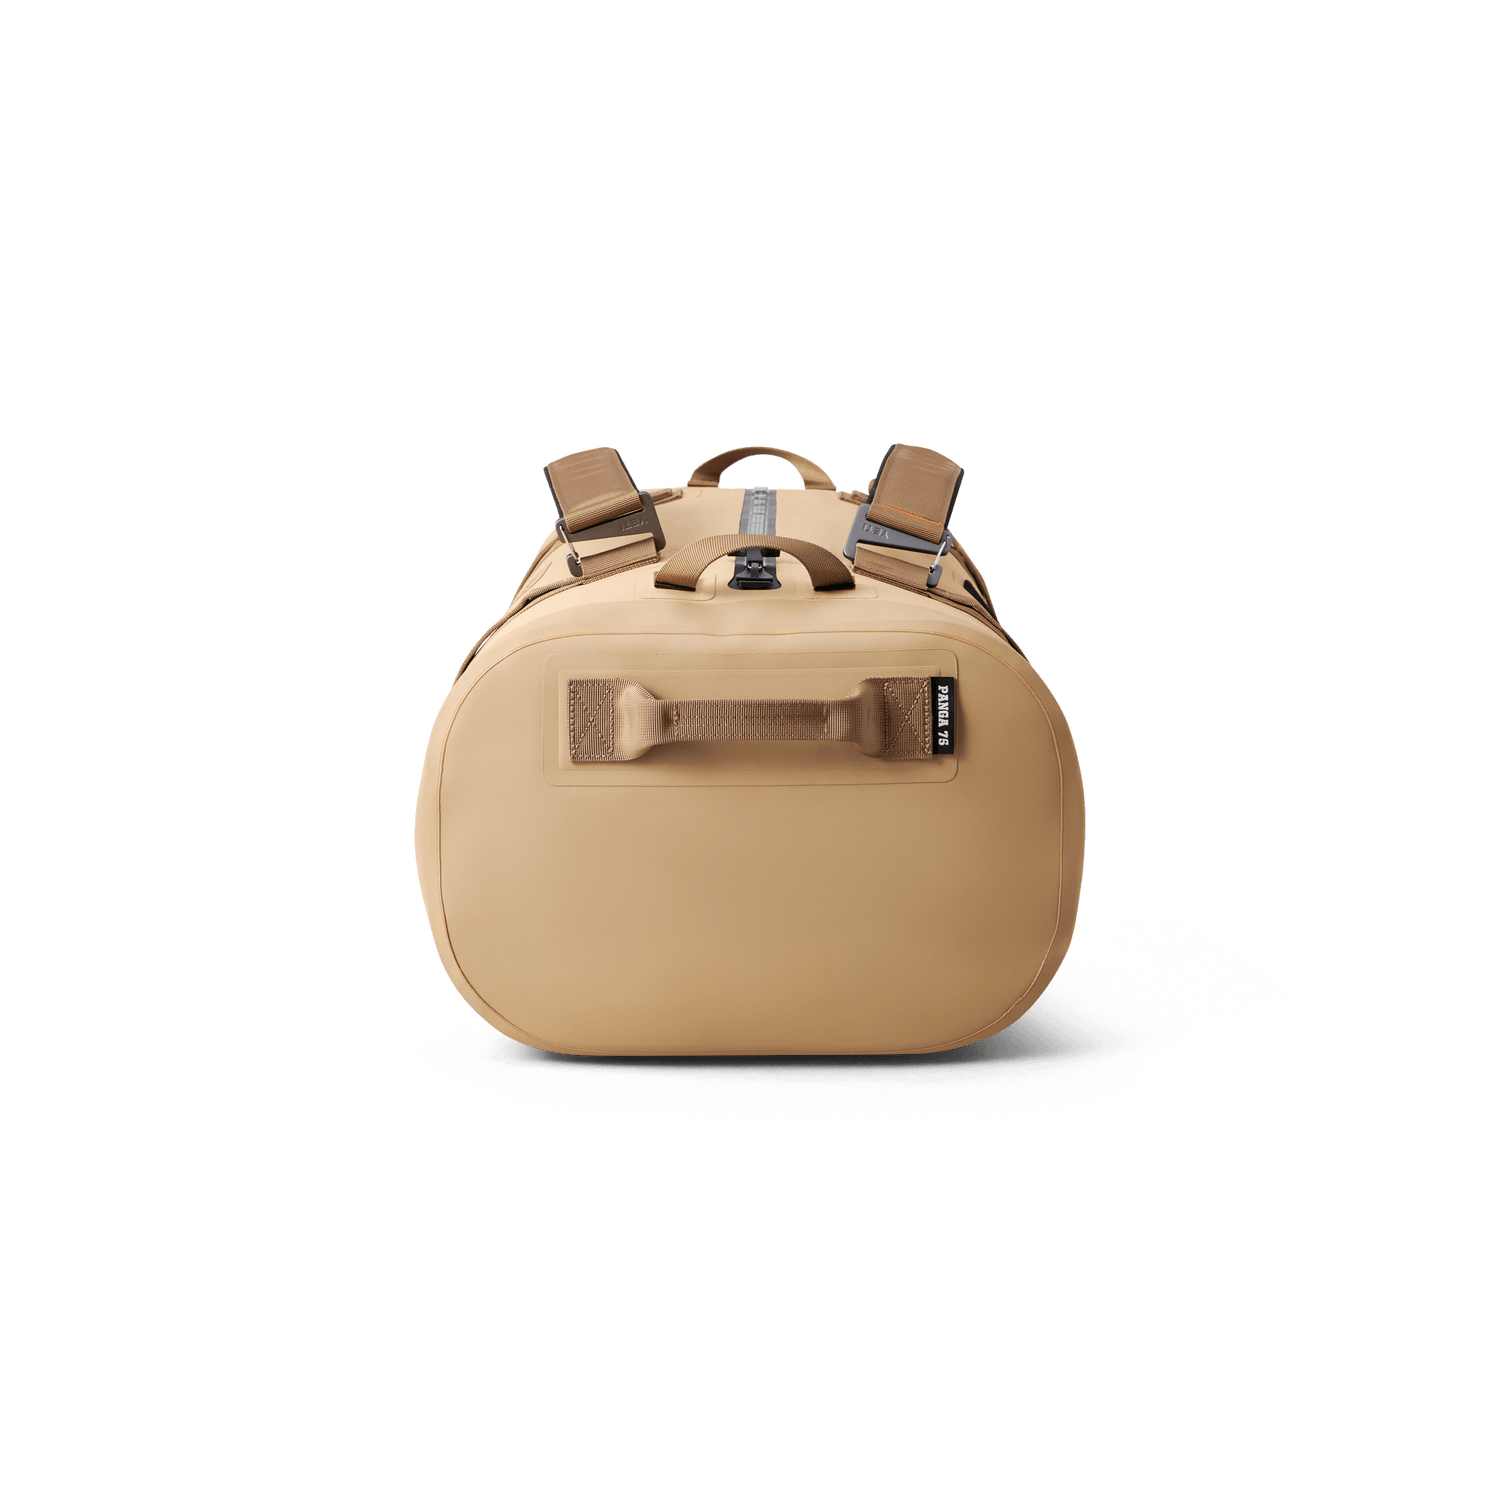 YETI® Panga 75 L Waterproof Duffel Bag – YETI EUROPE